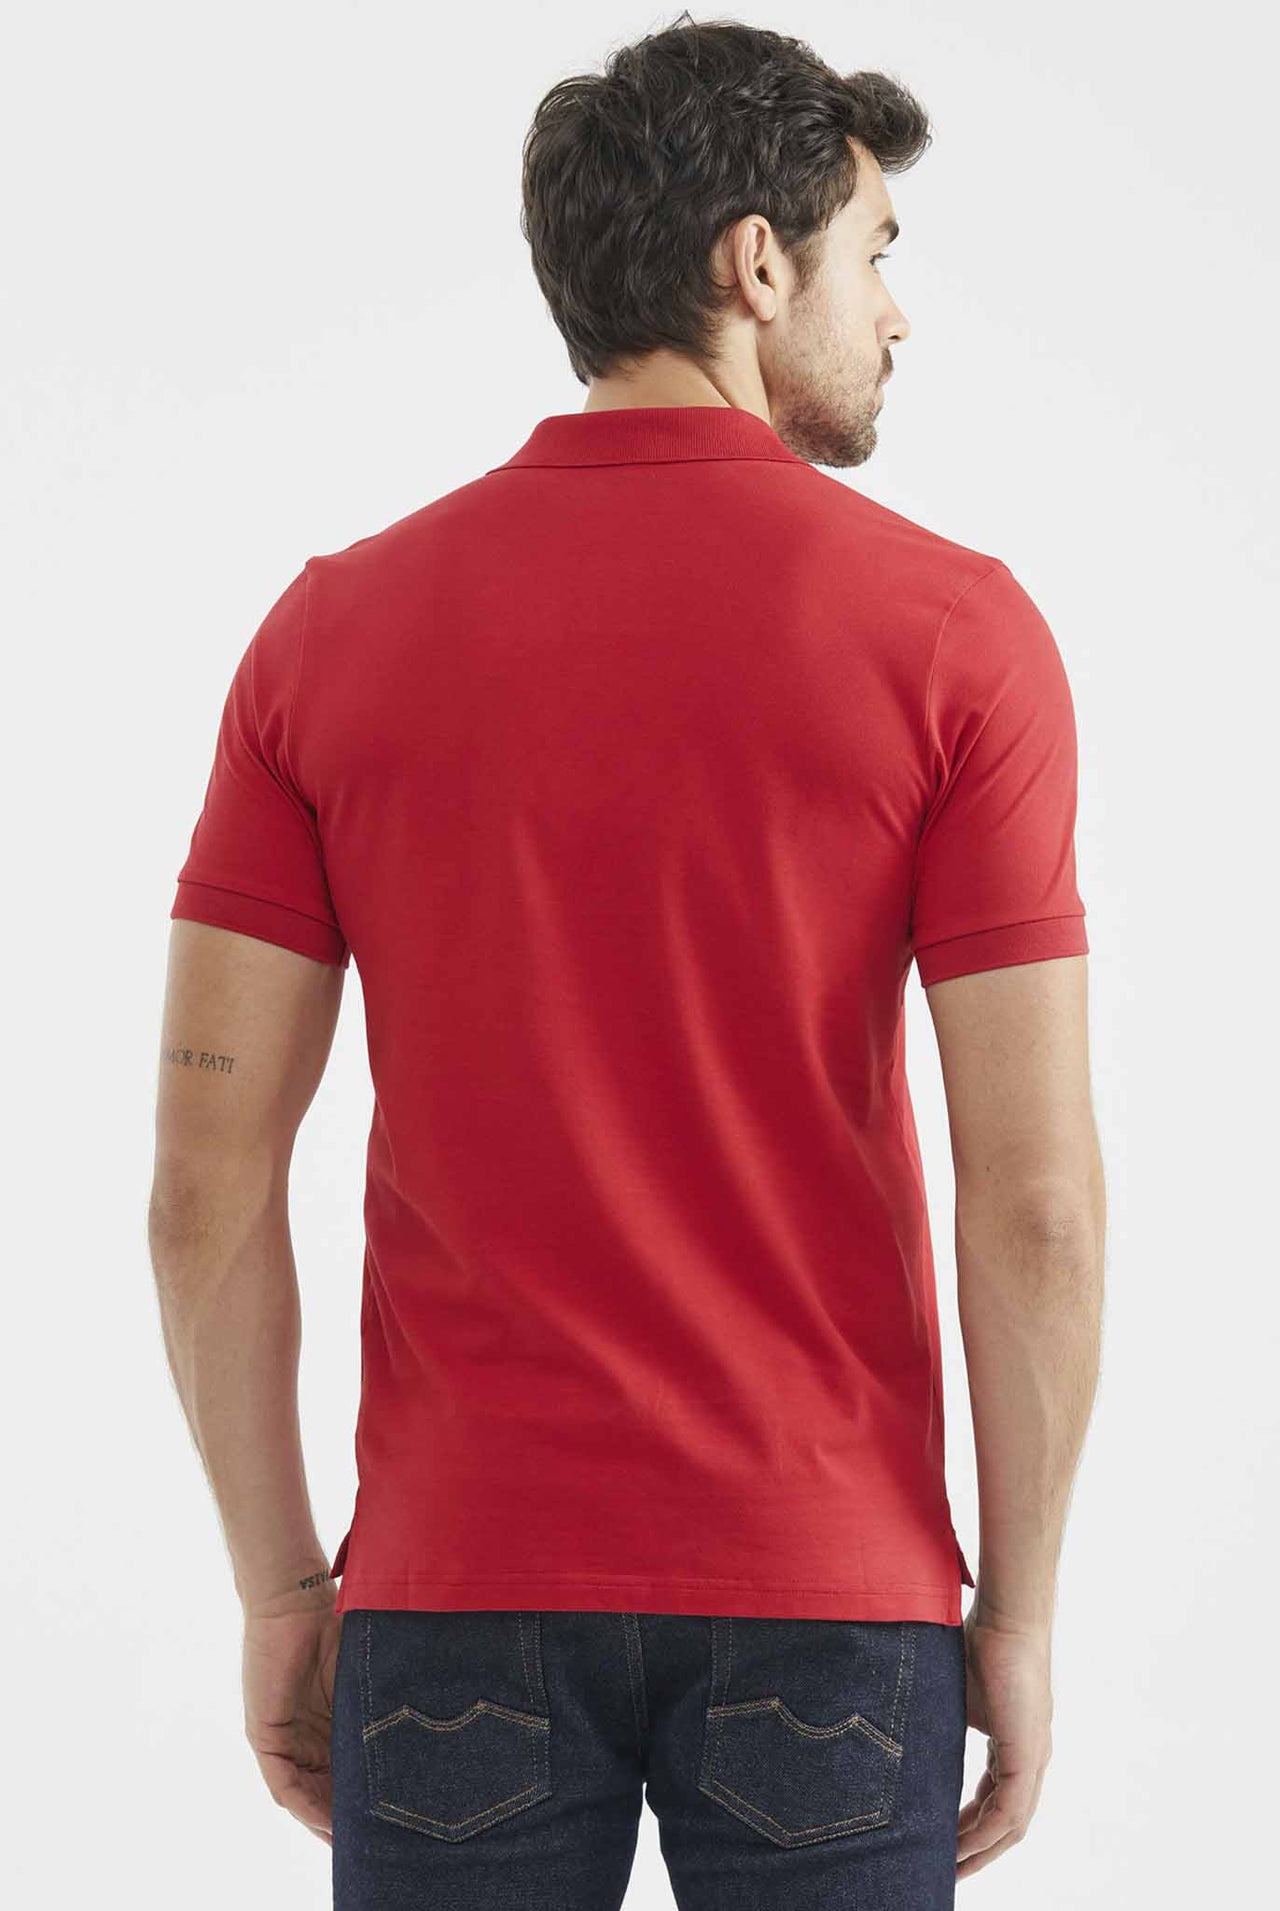 Camiseta Tipo Polo Chevignon Slim Fit Manga Corta, Cuello Tejidos Tono Rojo